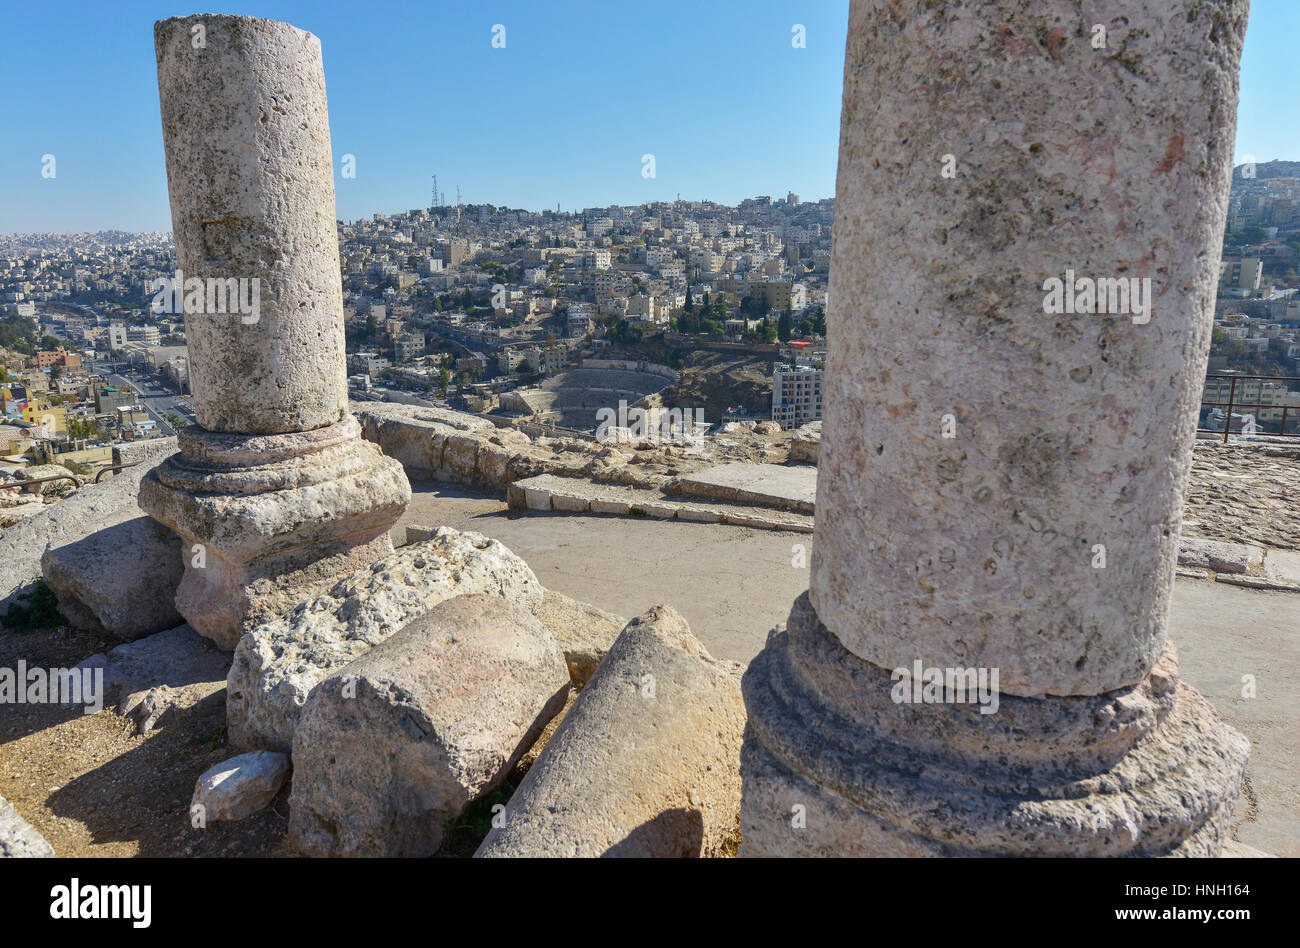 The ruins of the ancient citadel in Amman, Jordan Stock Photo